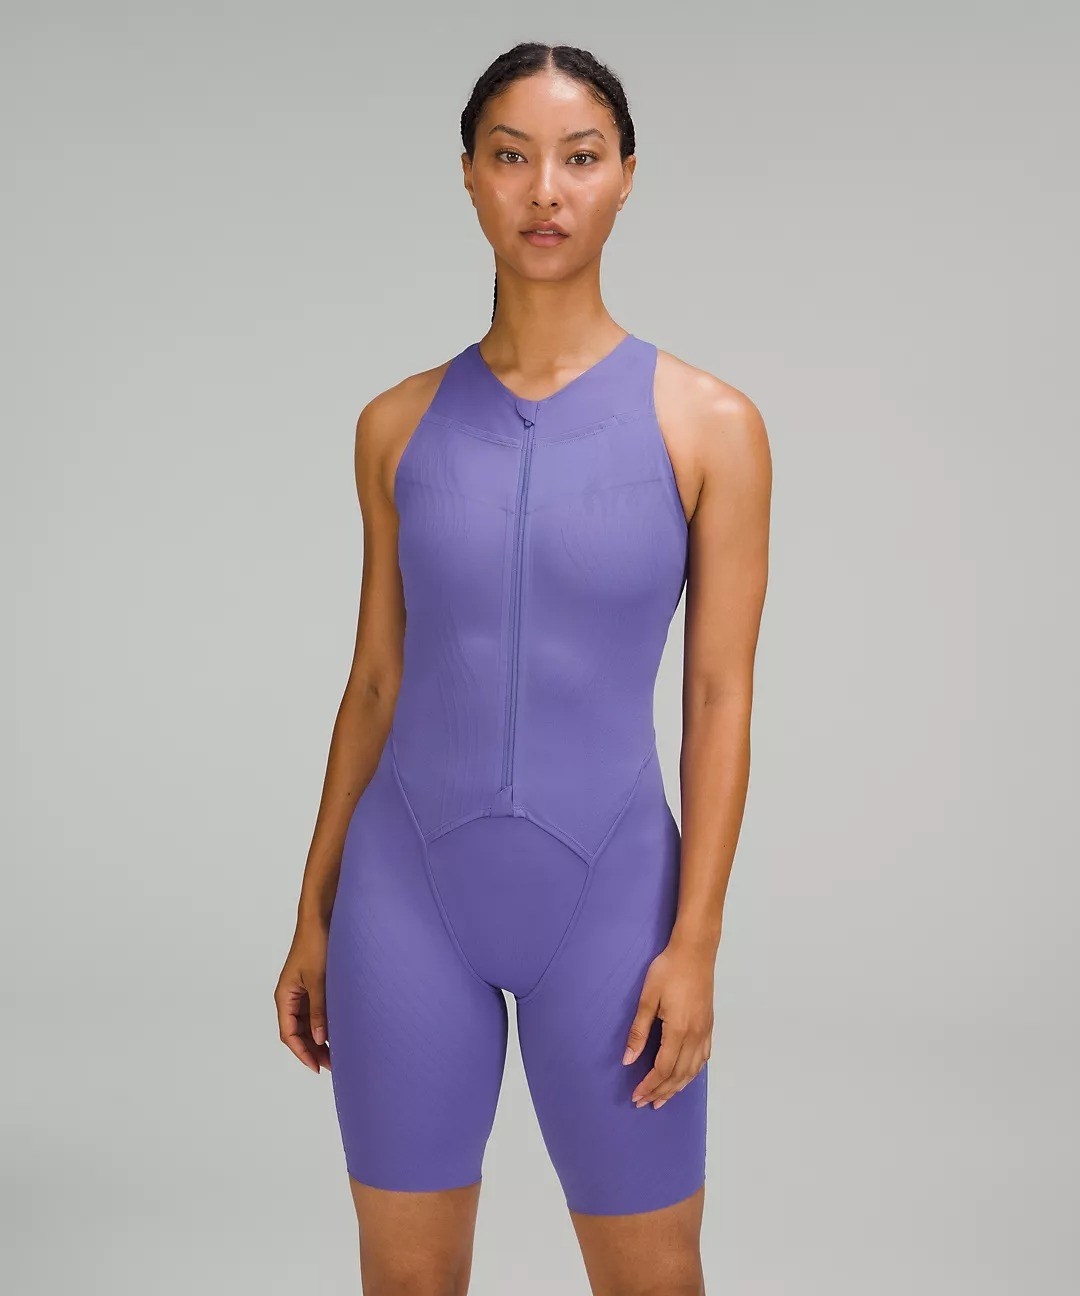 model wearing the one piece in indigo